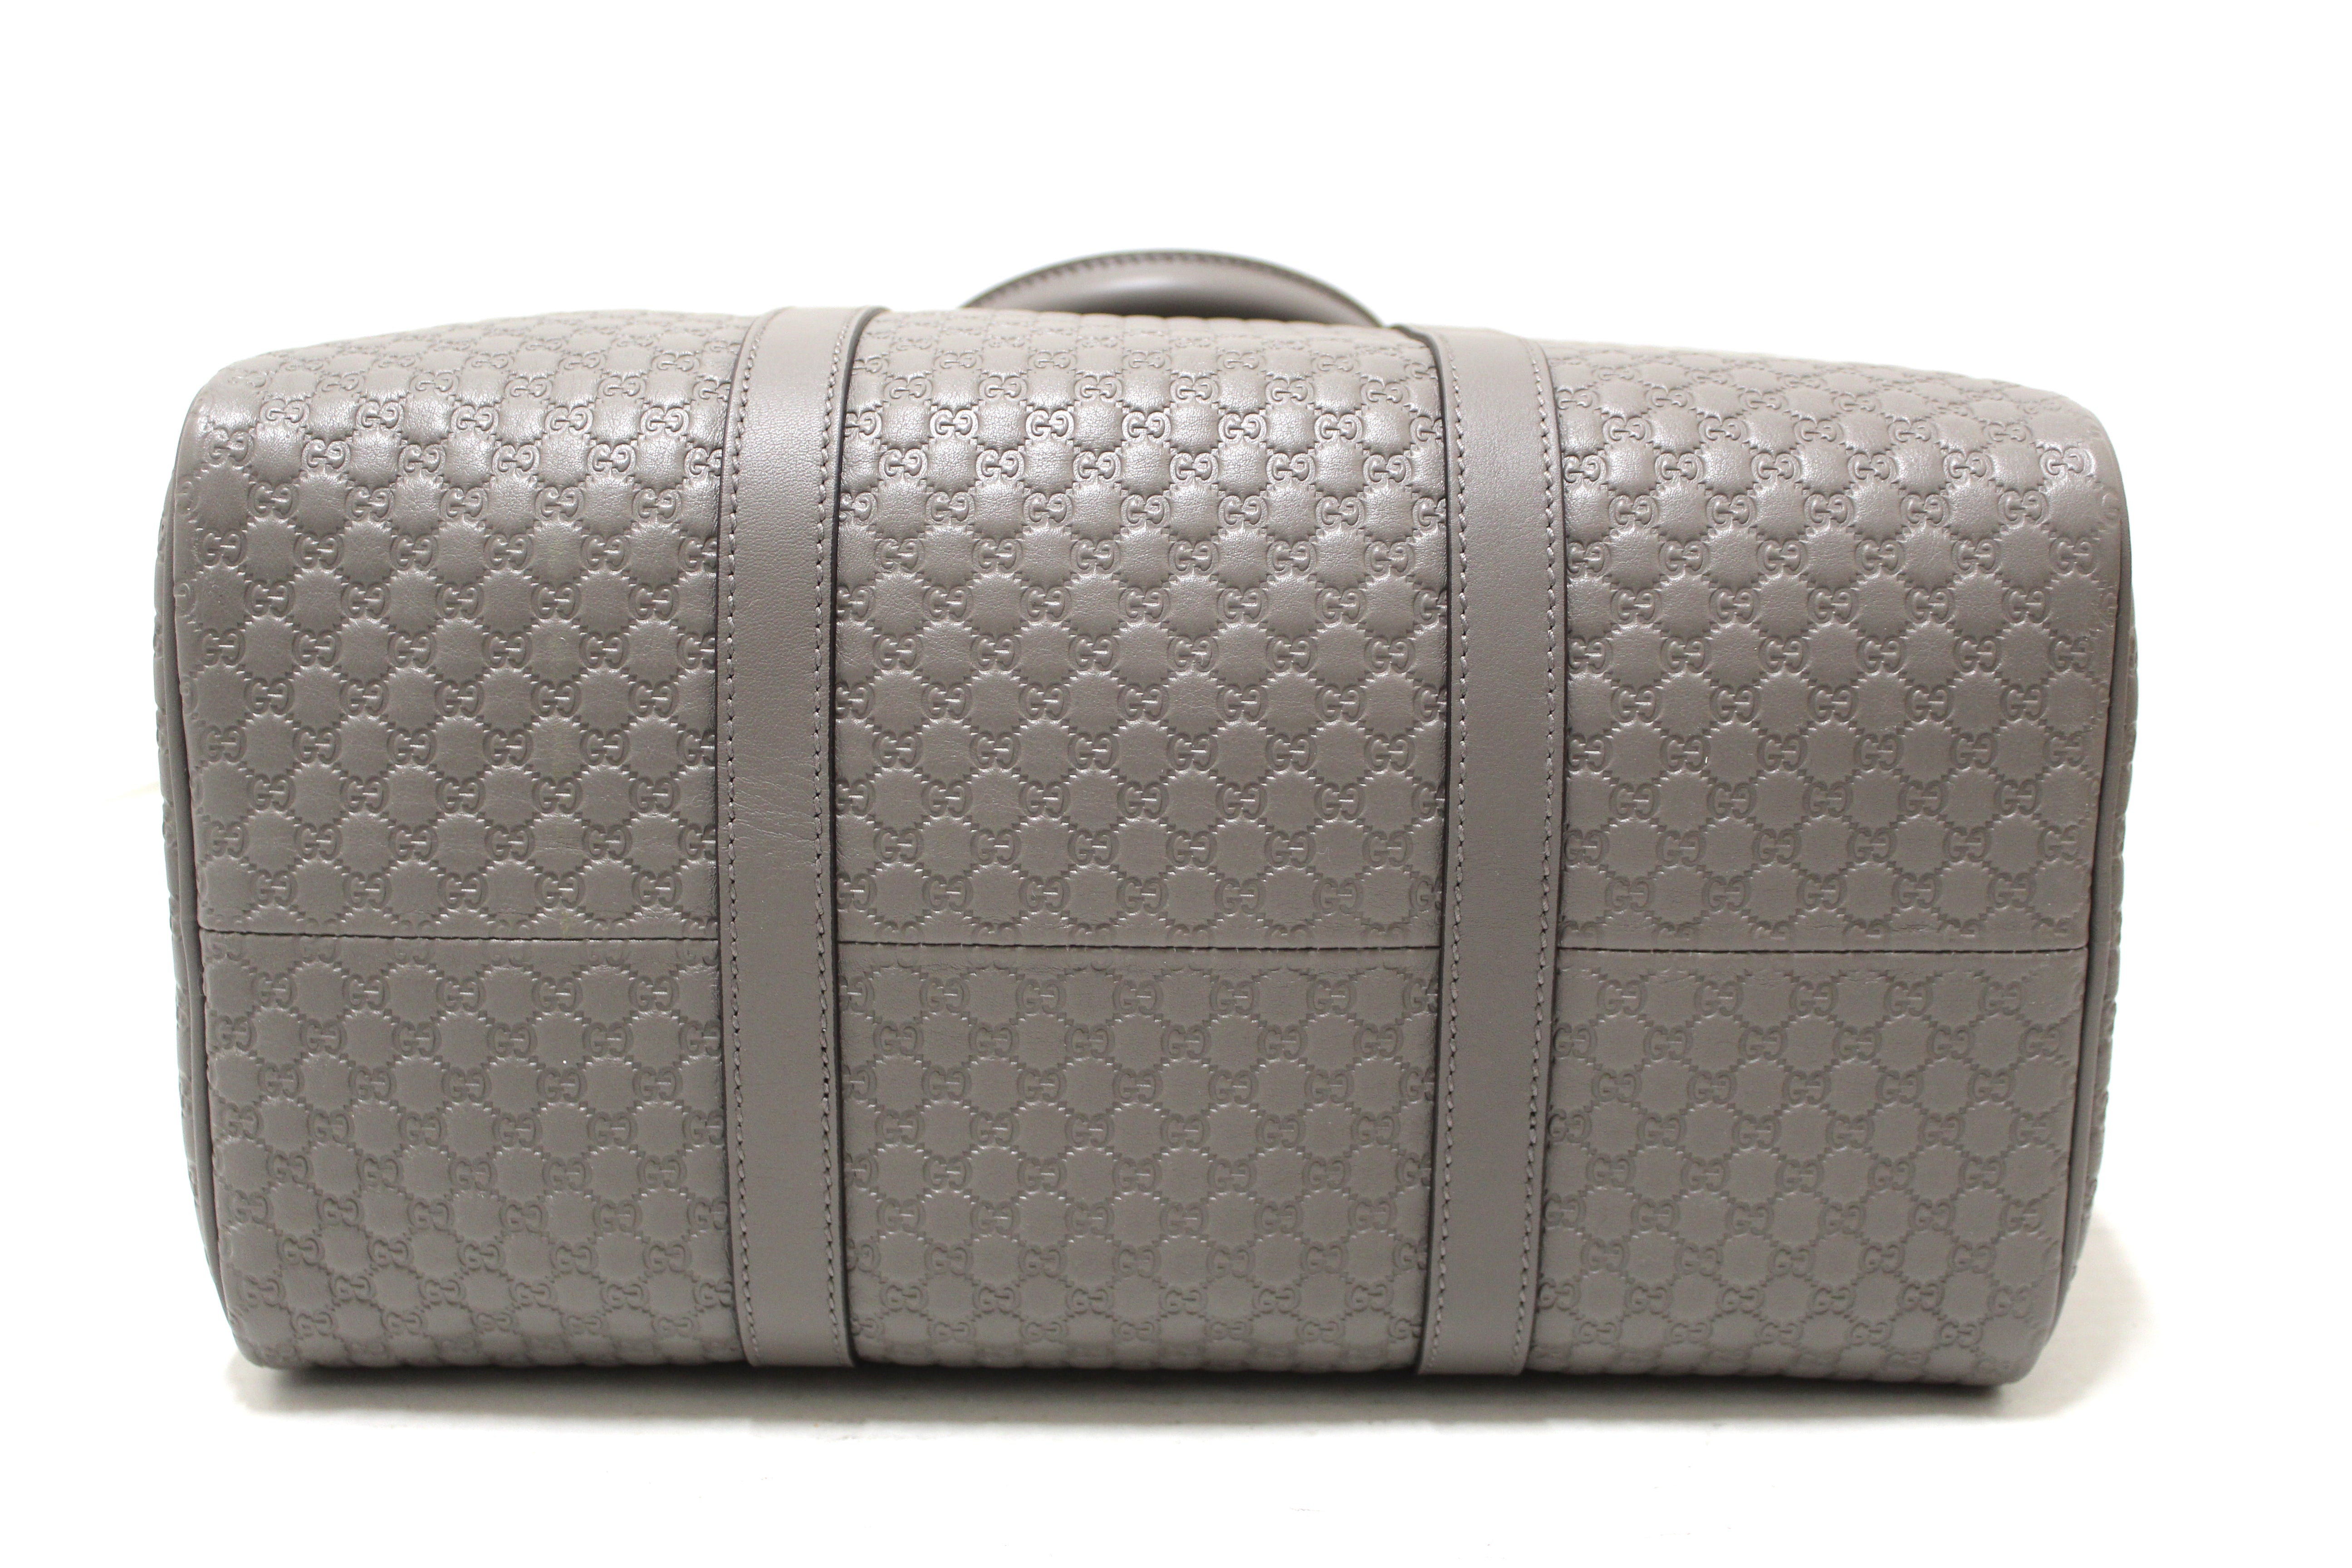 Boston leather handbag Gucci Grey in Leather - 36012935